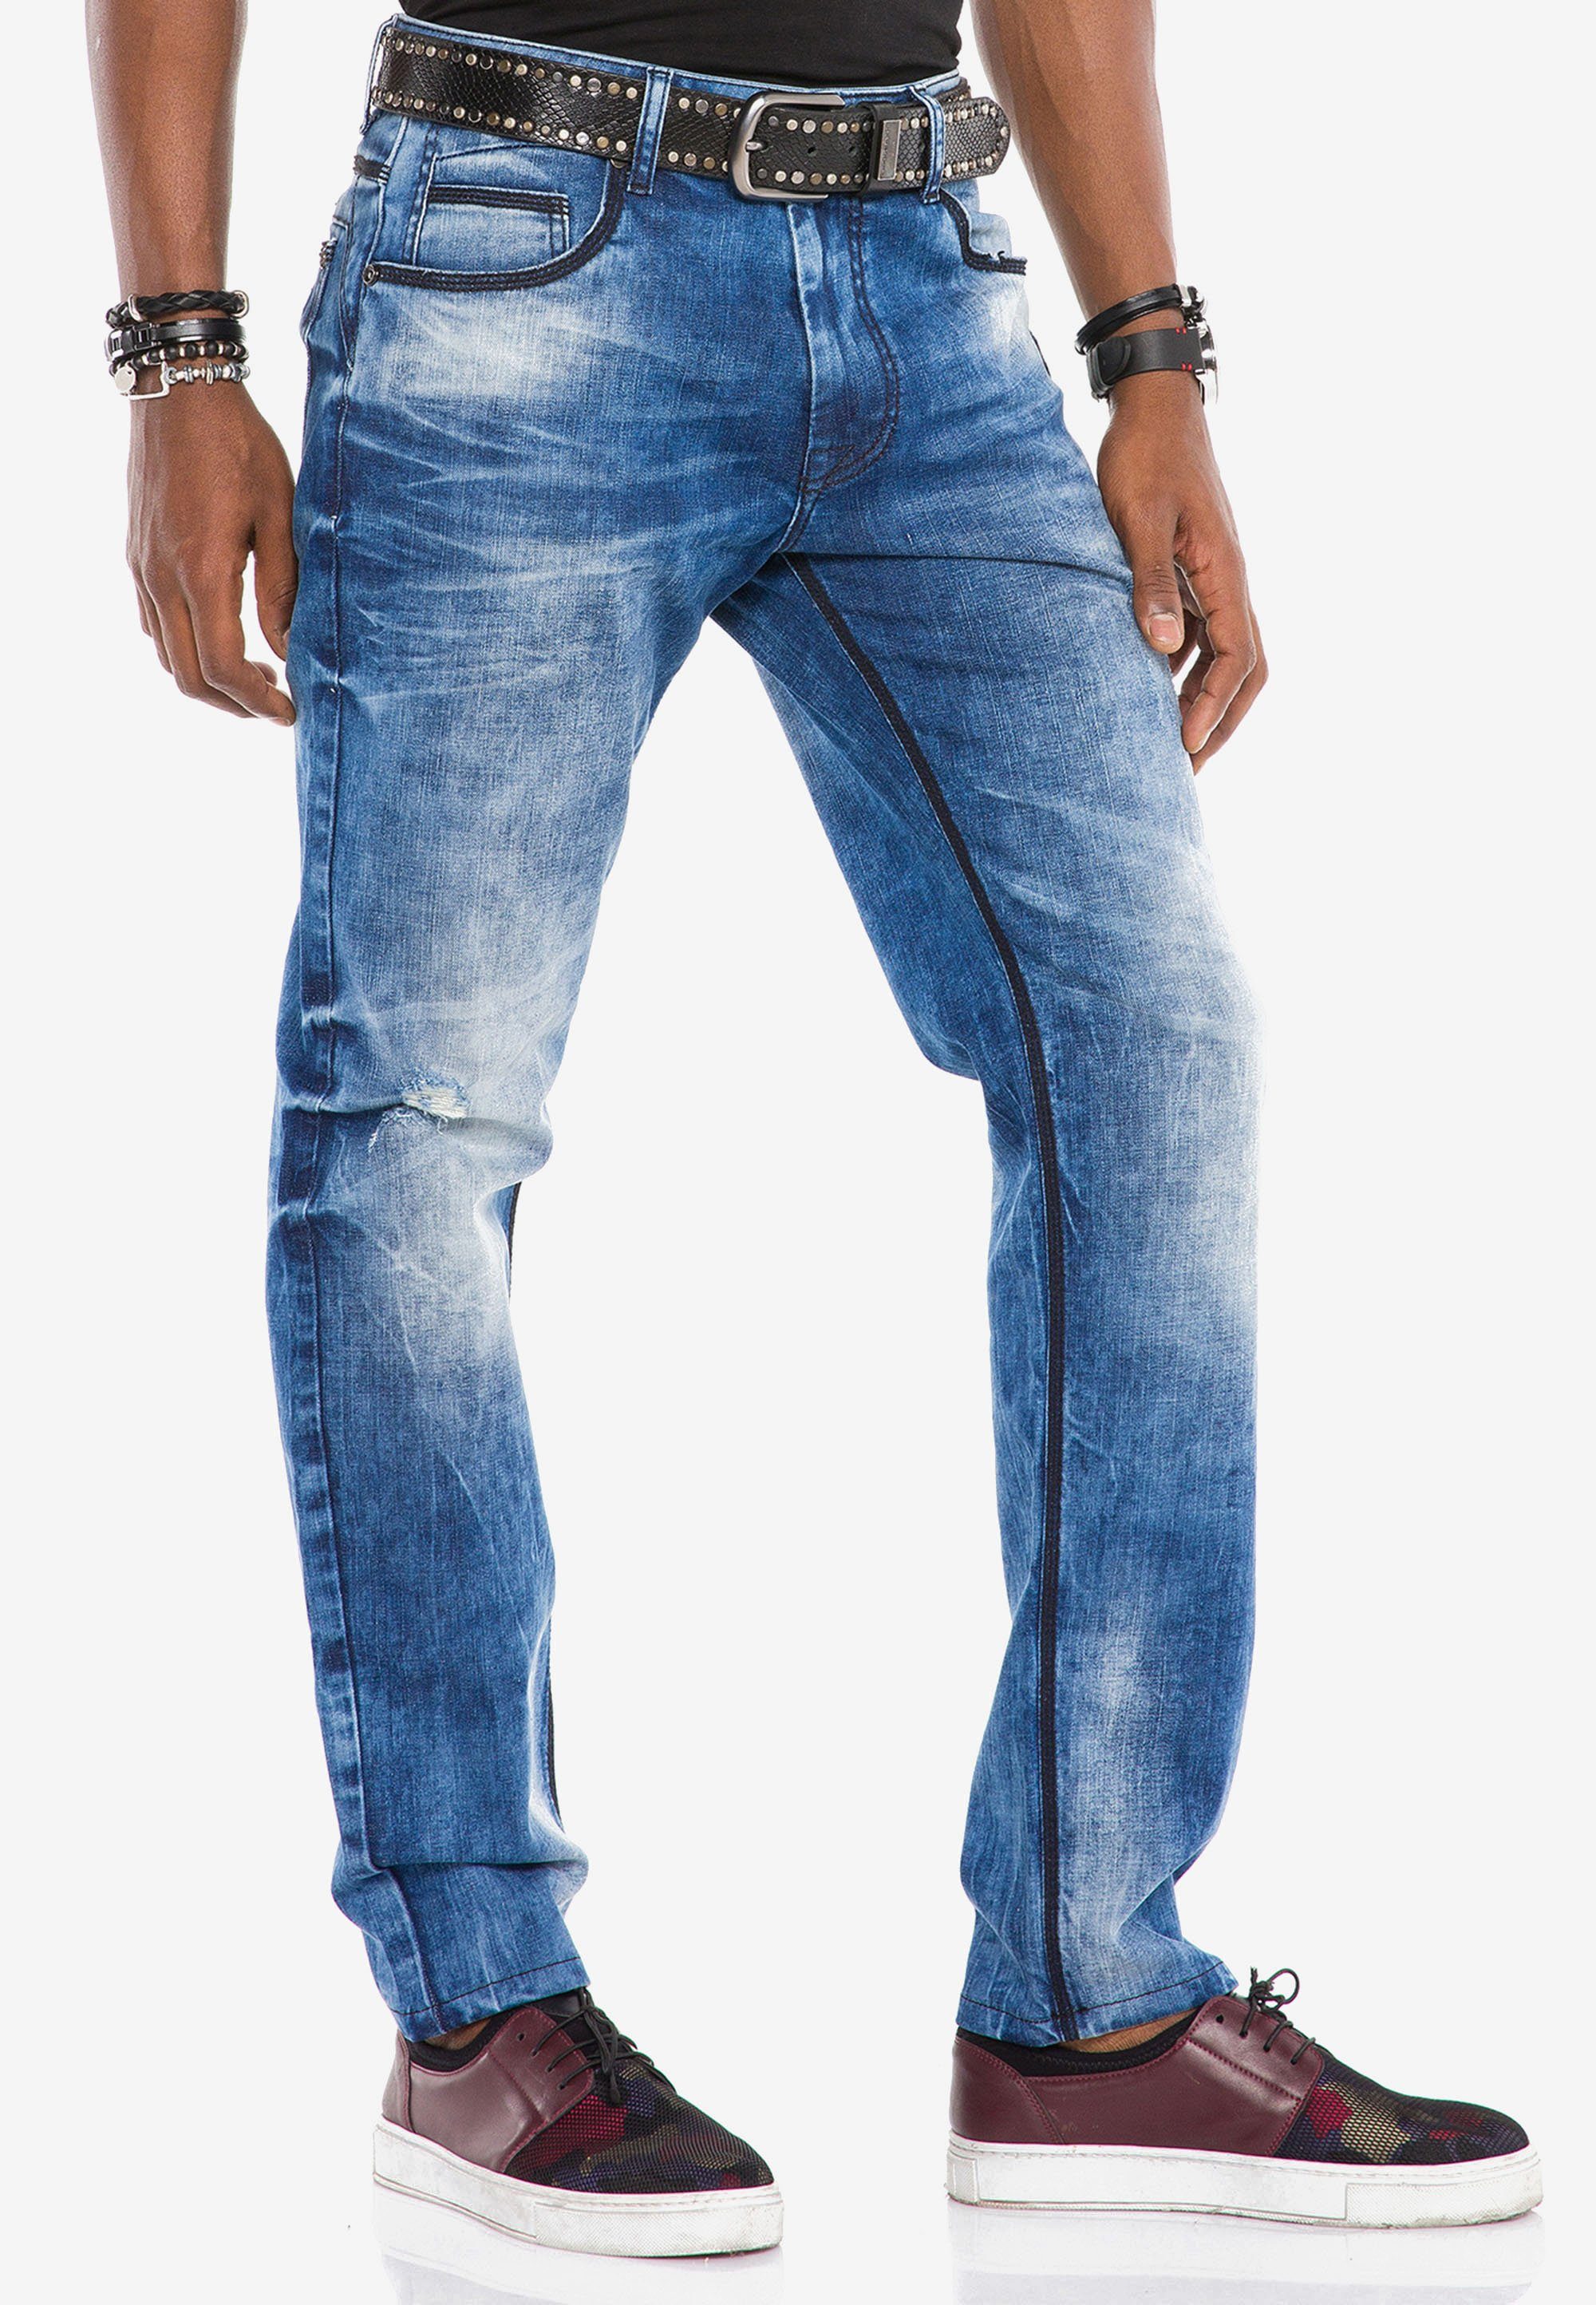 Cipo & Baxx Bequeme coolen Kontrastnähten mit Jeans